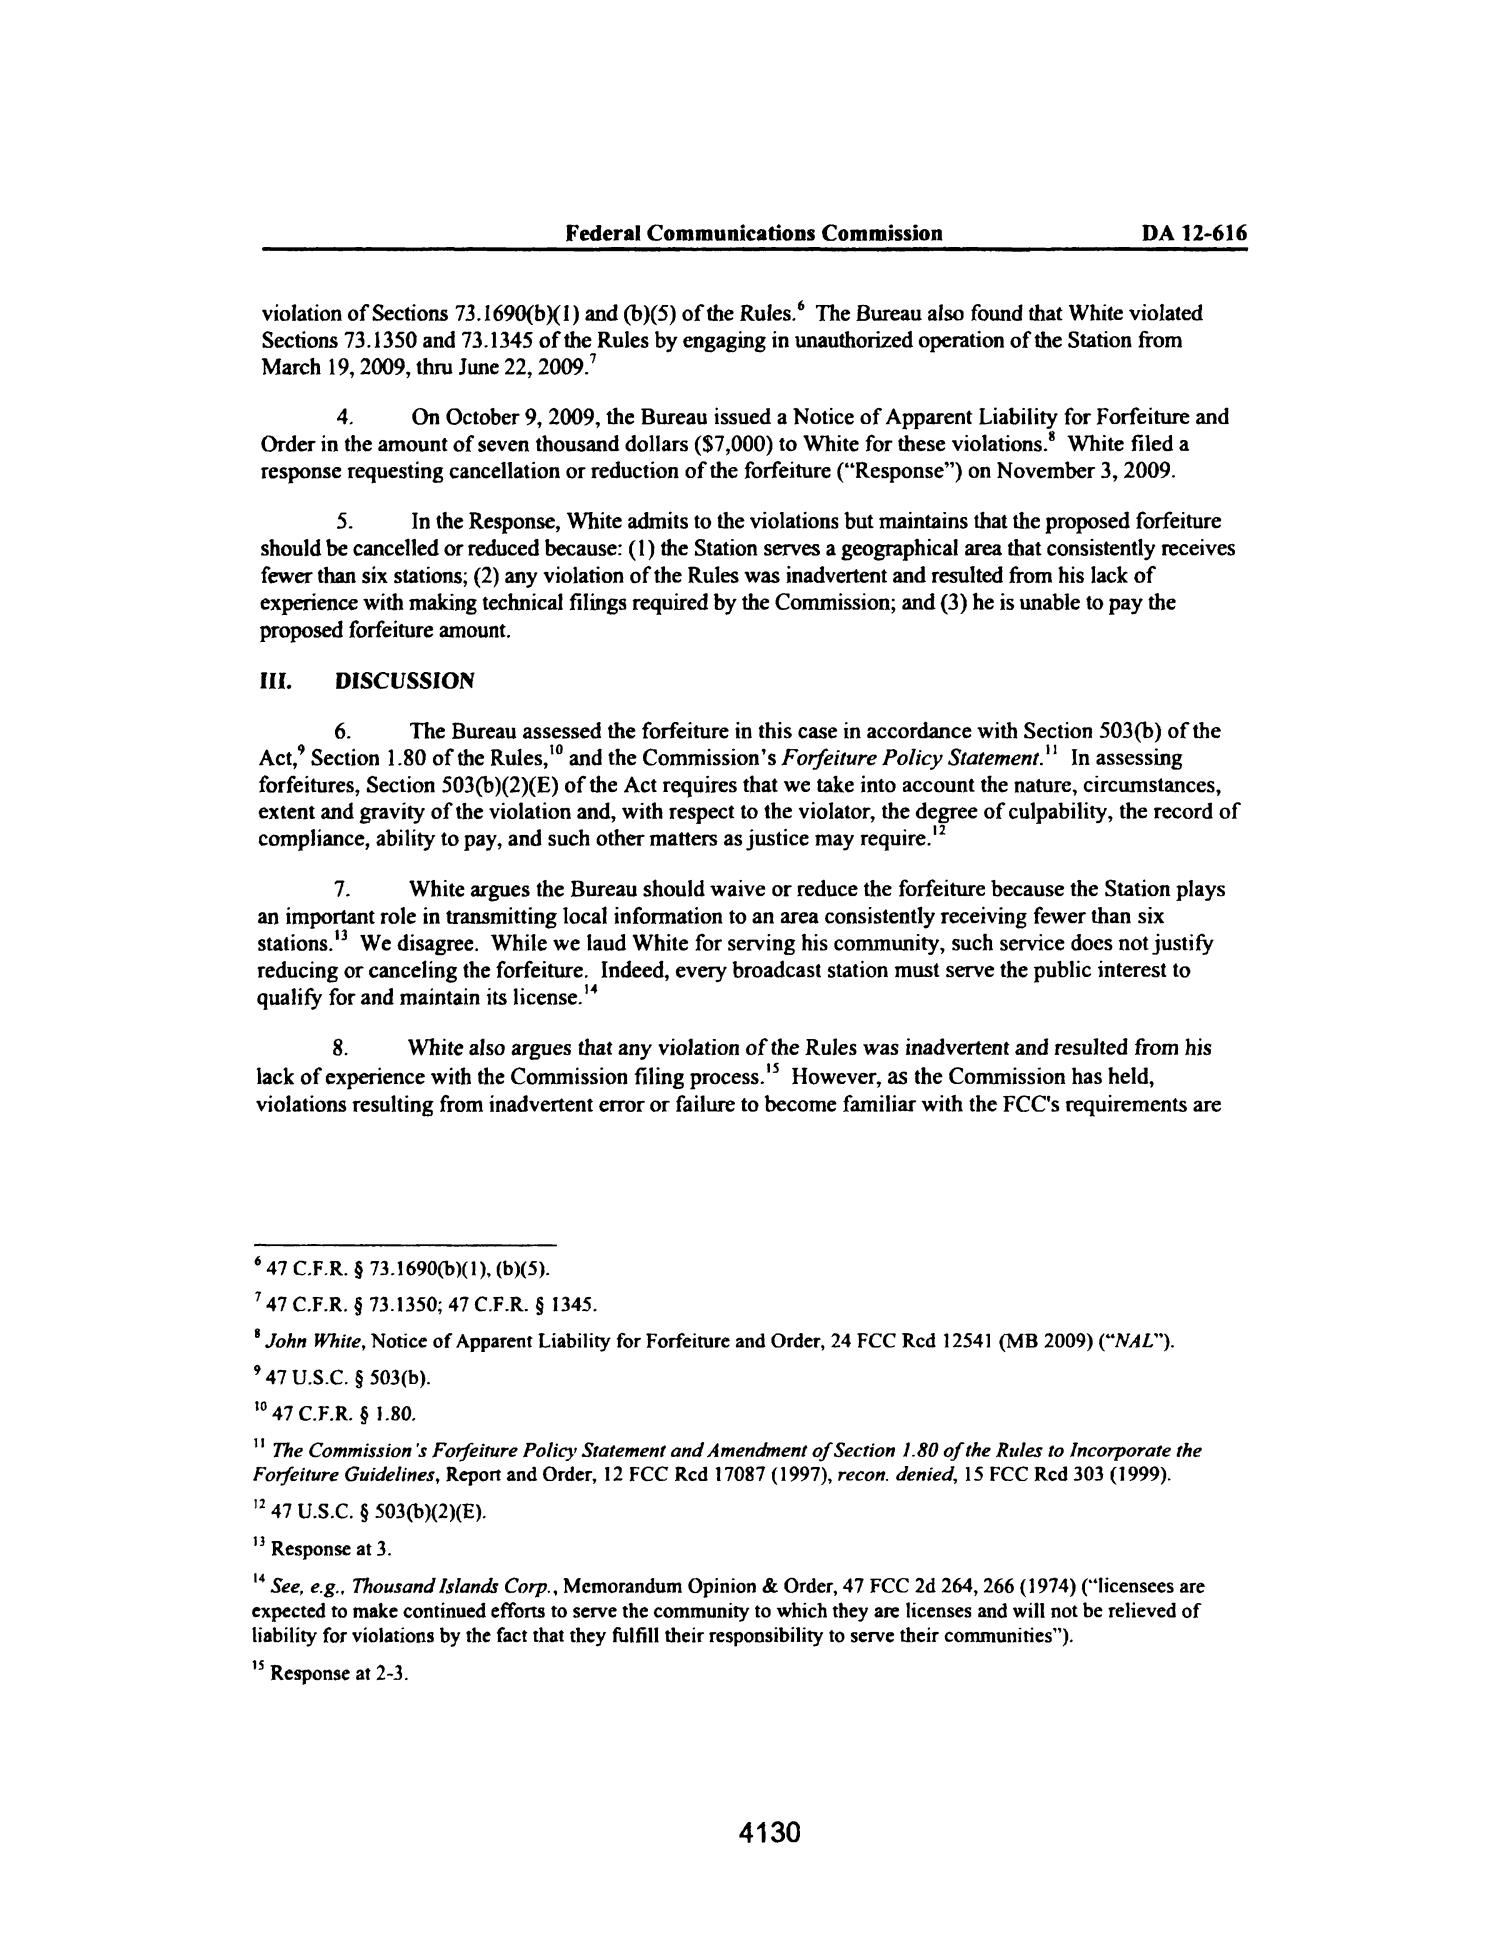 FCC Record, Volume 27, No. 5, Pages 3728 to 4696, April 9 - April 27, 2012
                                                
                                                    4130
                                                